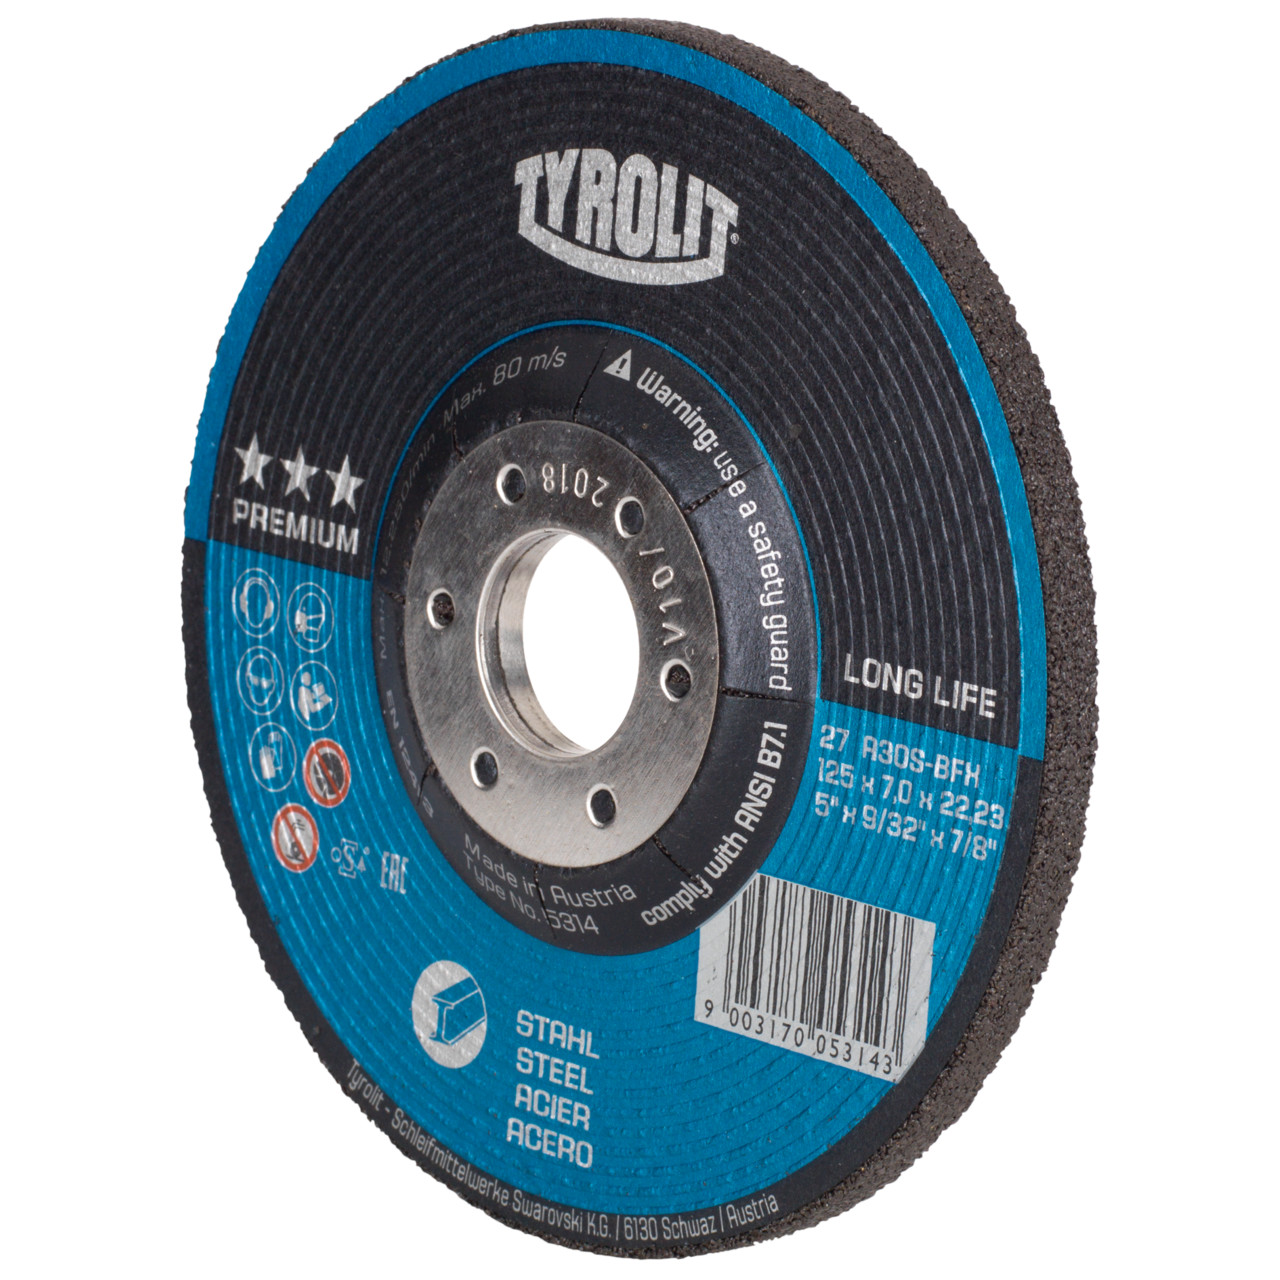 Tyrolit Rough grinding disc DxUxH 125x7x22.23 LONGLIFE Z-MAX for steel, shape: 27 - offset version, Art. 34353684